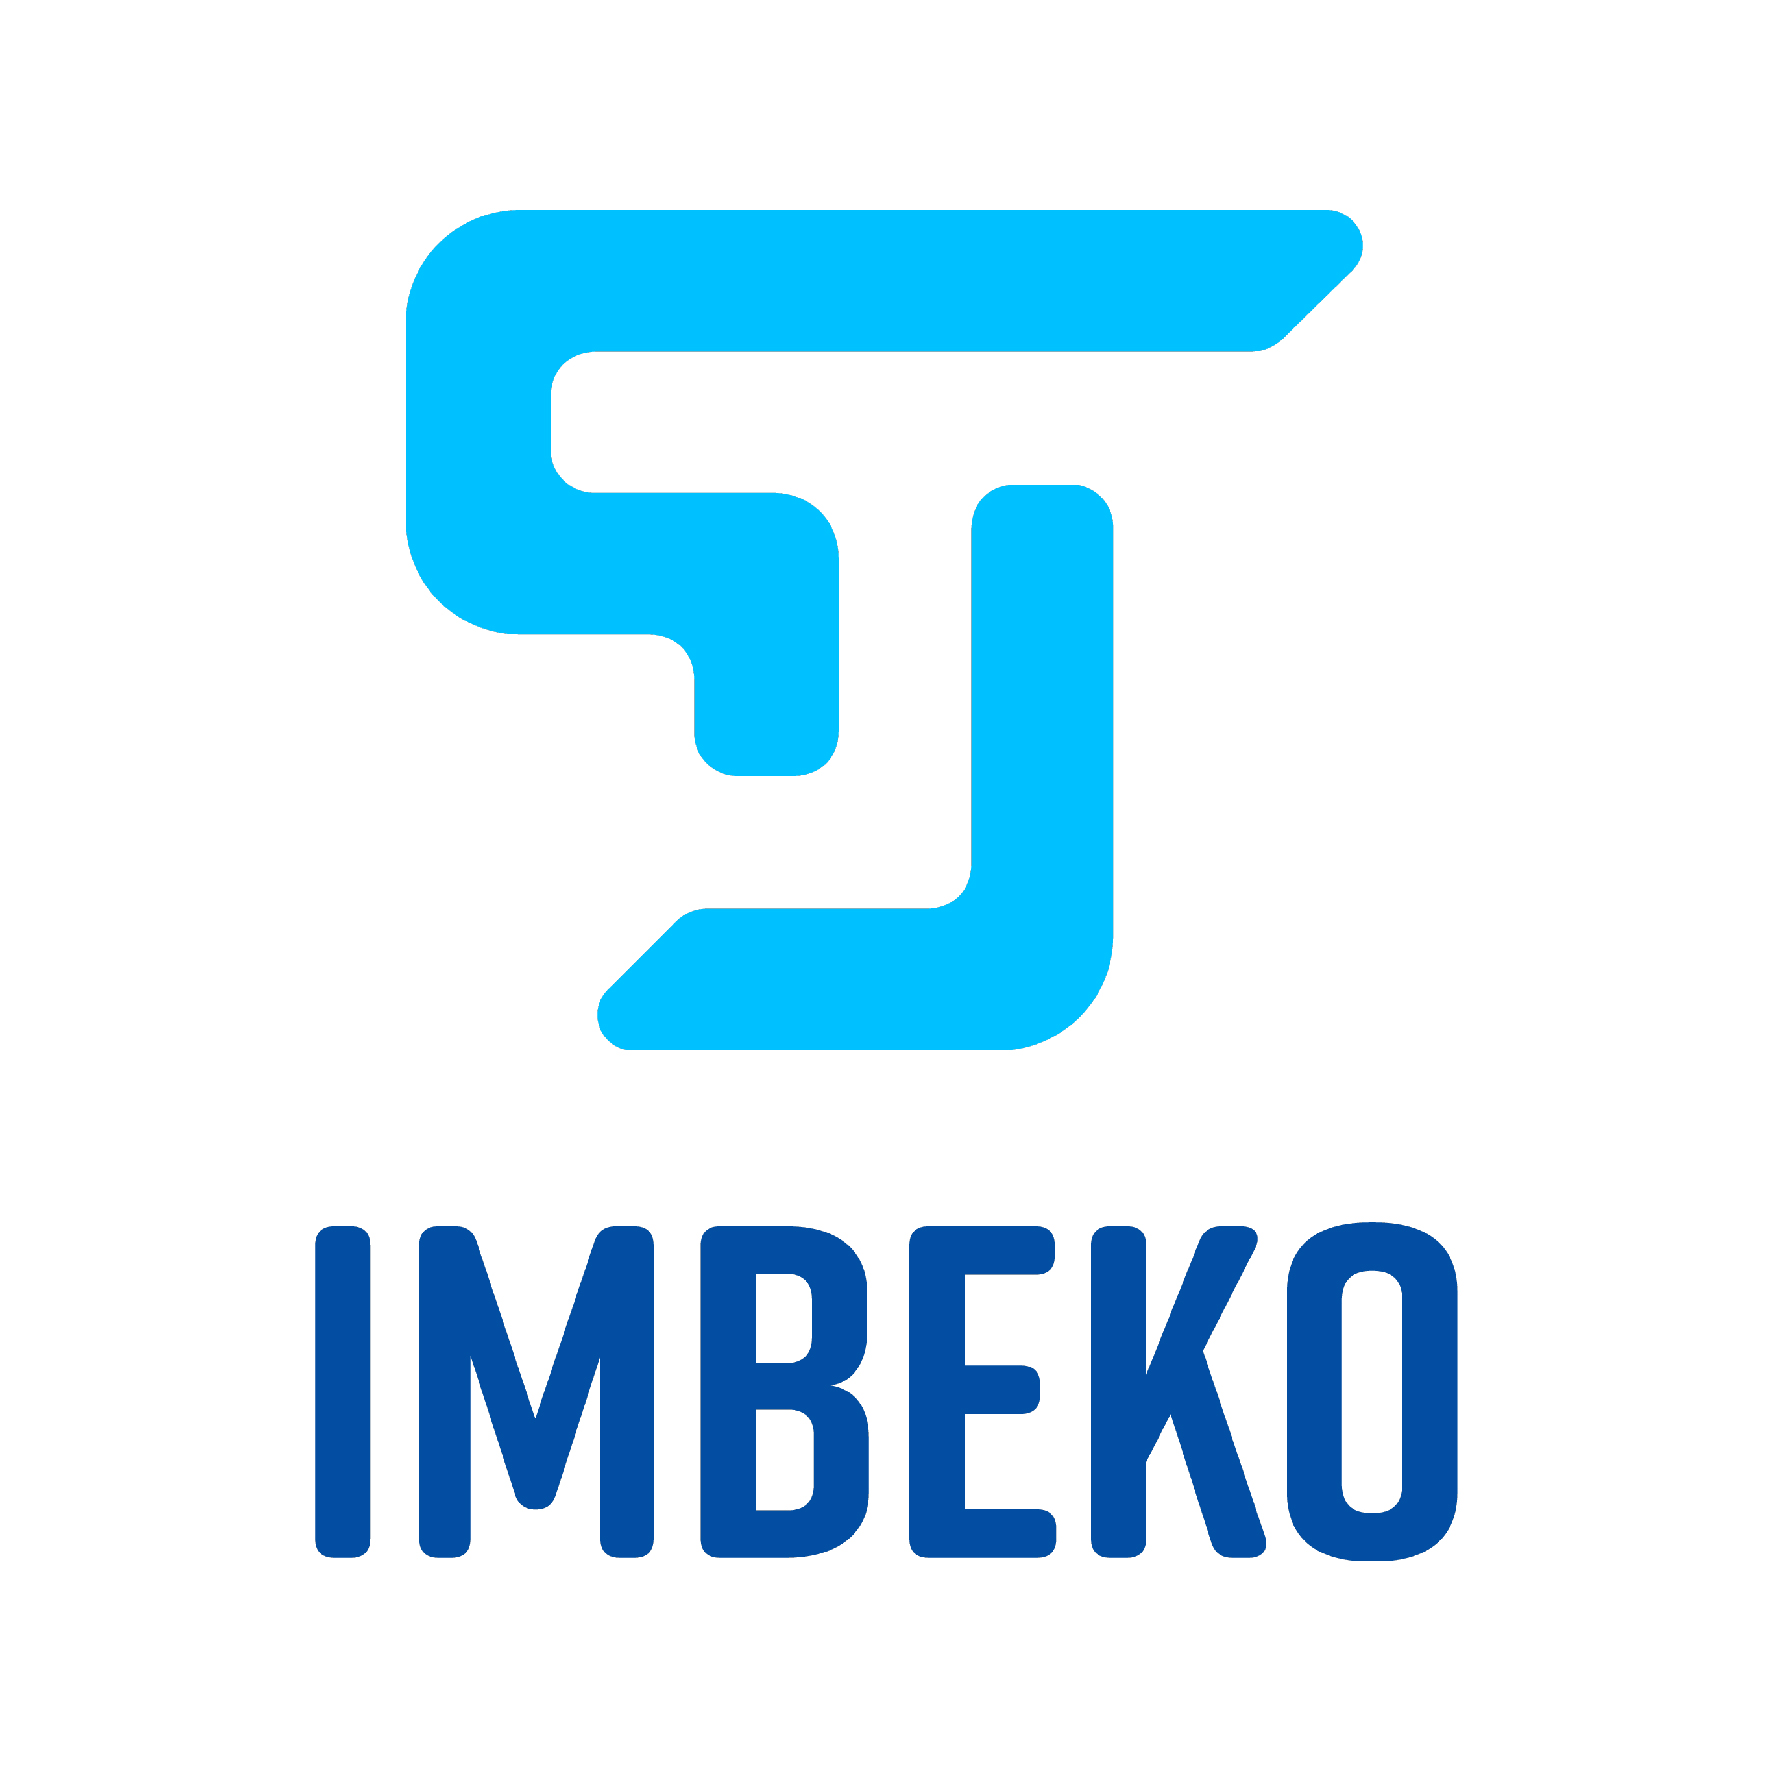 payment switch_Imbeko